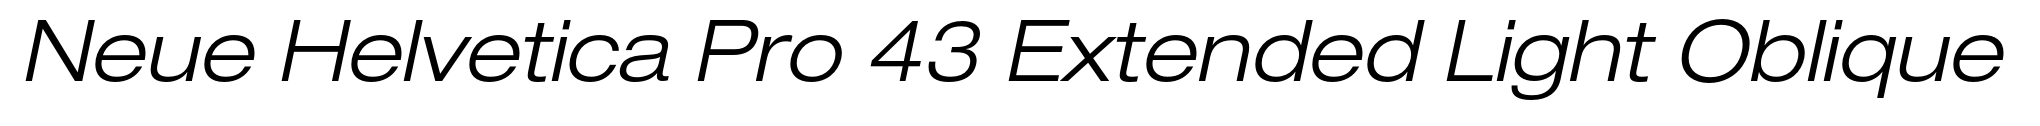 Neue Helvetica Pro 43 Extended Light Oblique image